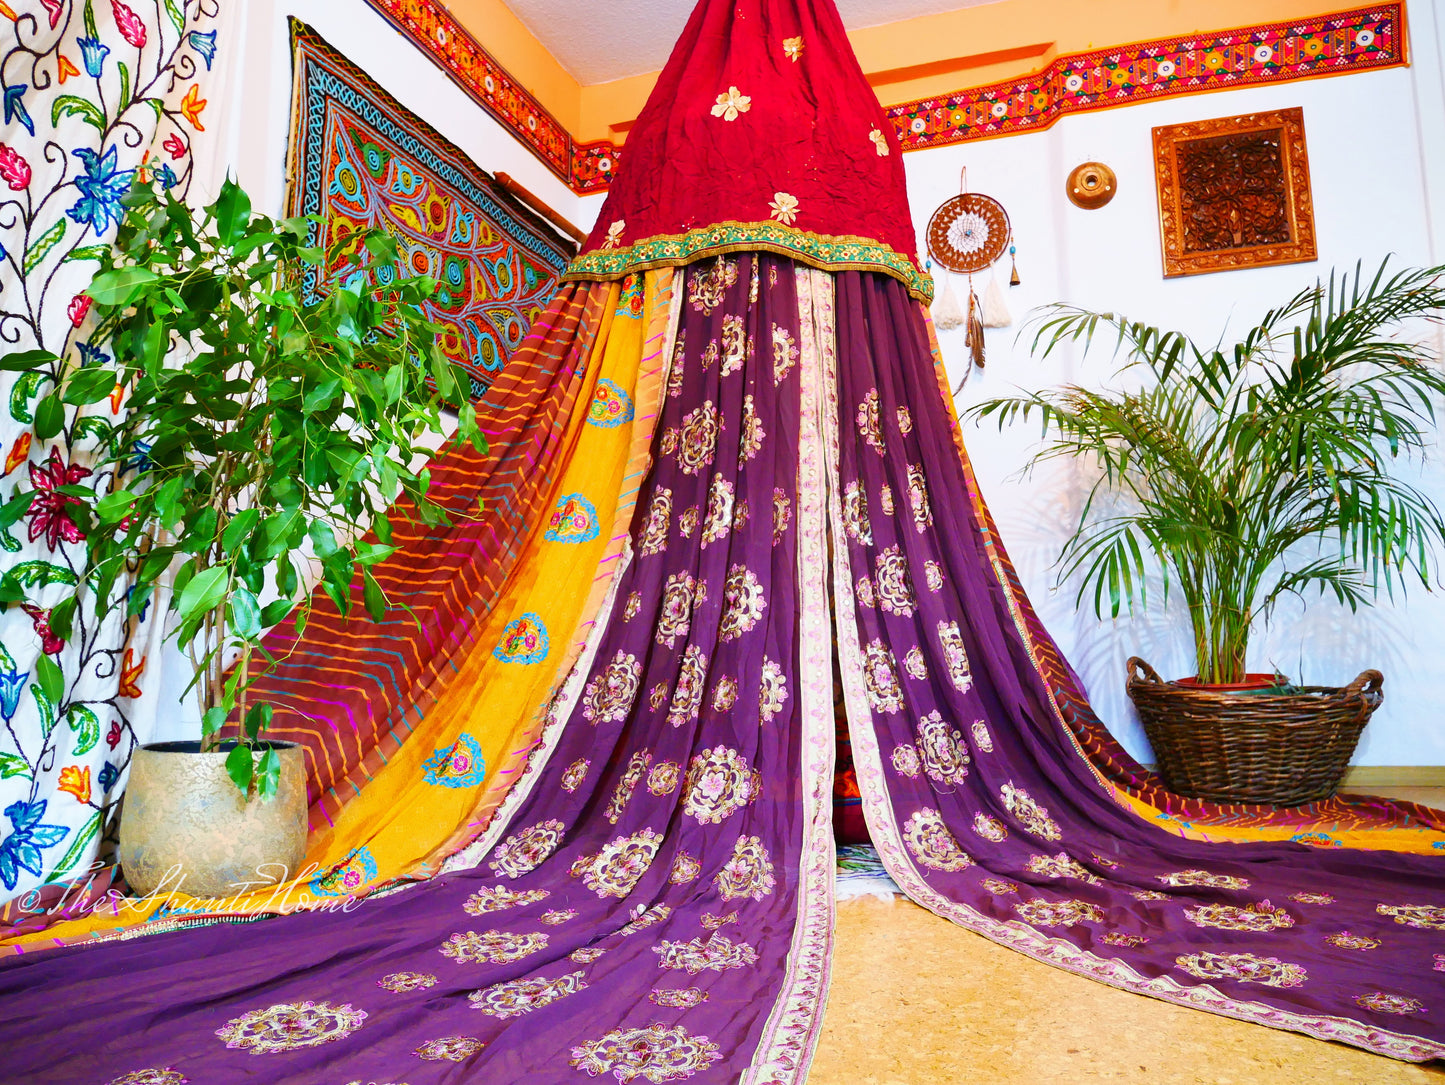 Saree tent - Indian canopy - boho bed canopy  | bohemian wedding backdrop - Hippie decor - floor seating area | meditation room - Shanti baldachin